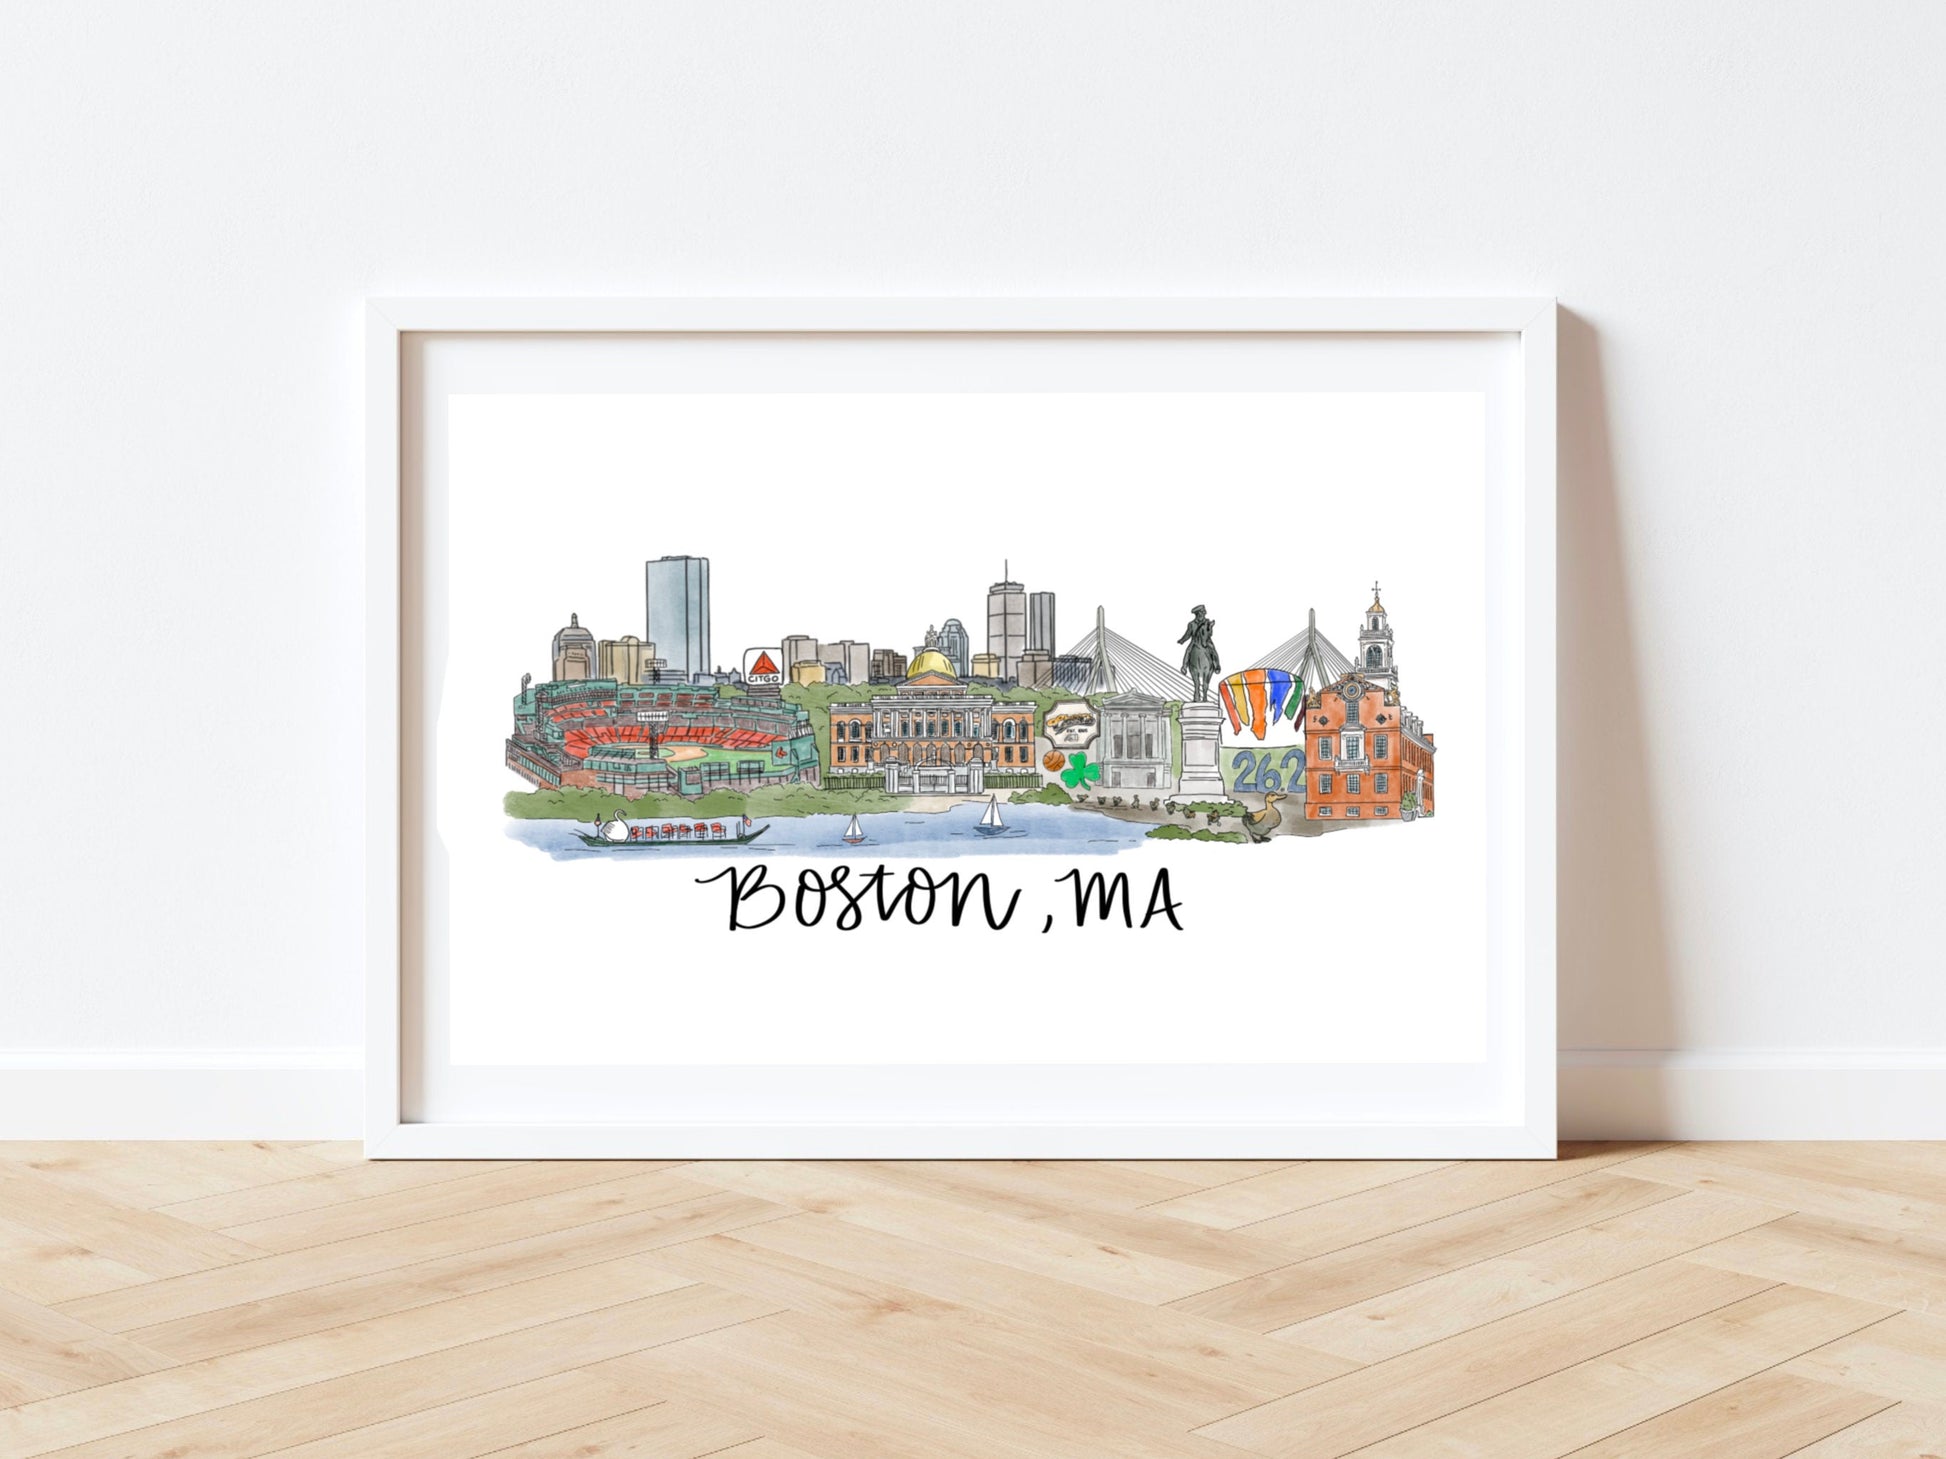 Boston Massachusetts Skyline Print - Fenway Park, Boston Commons